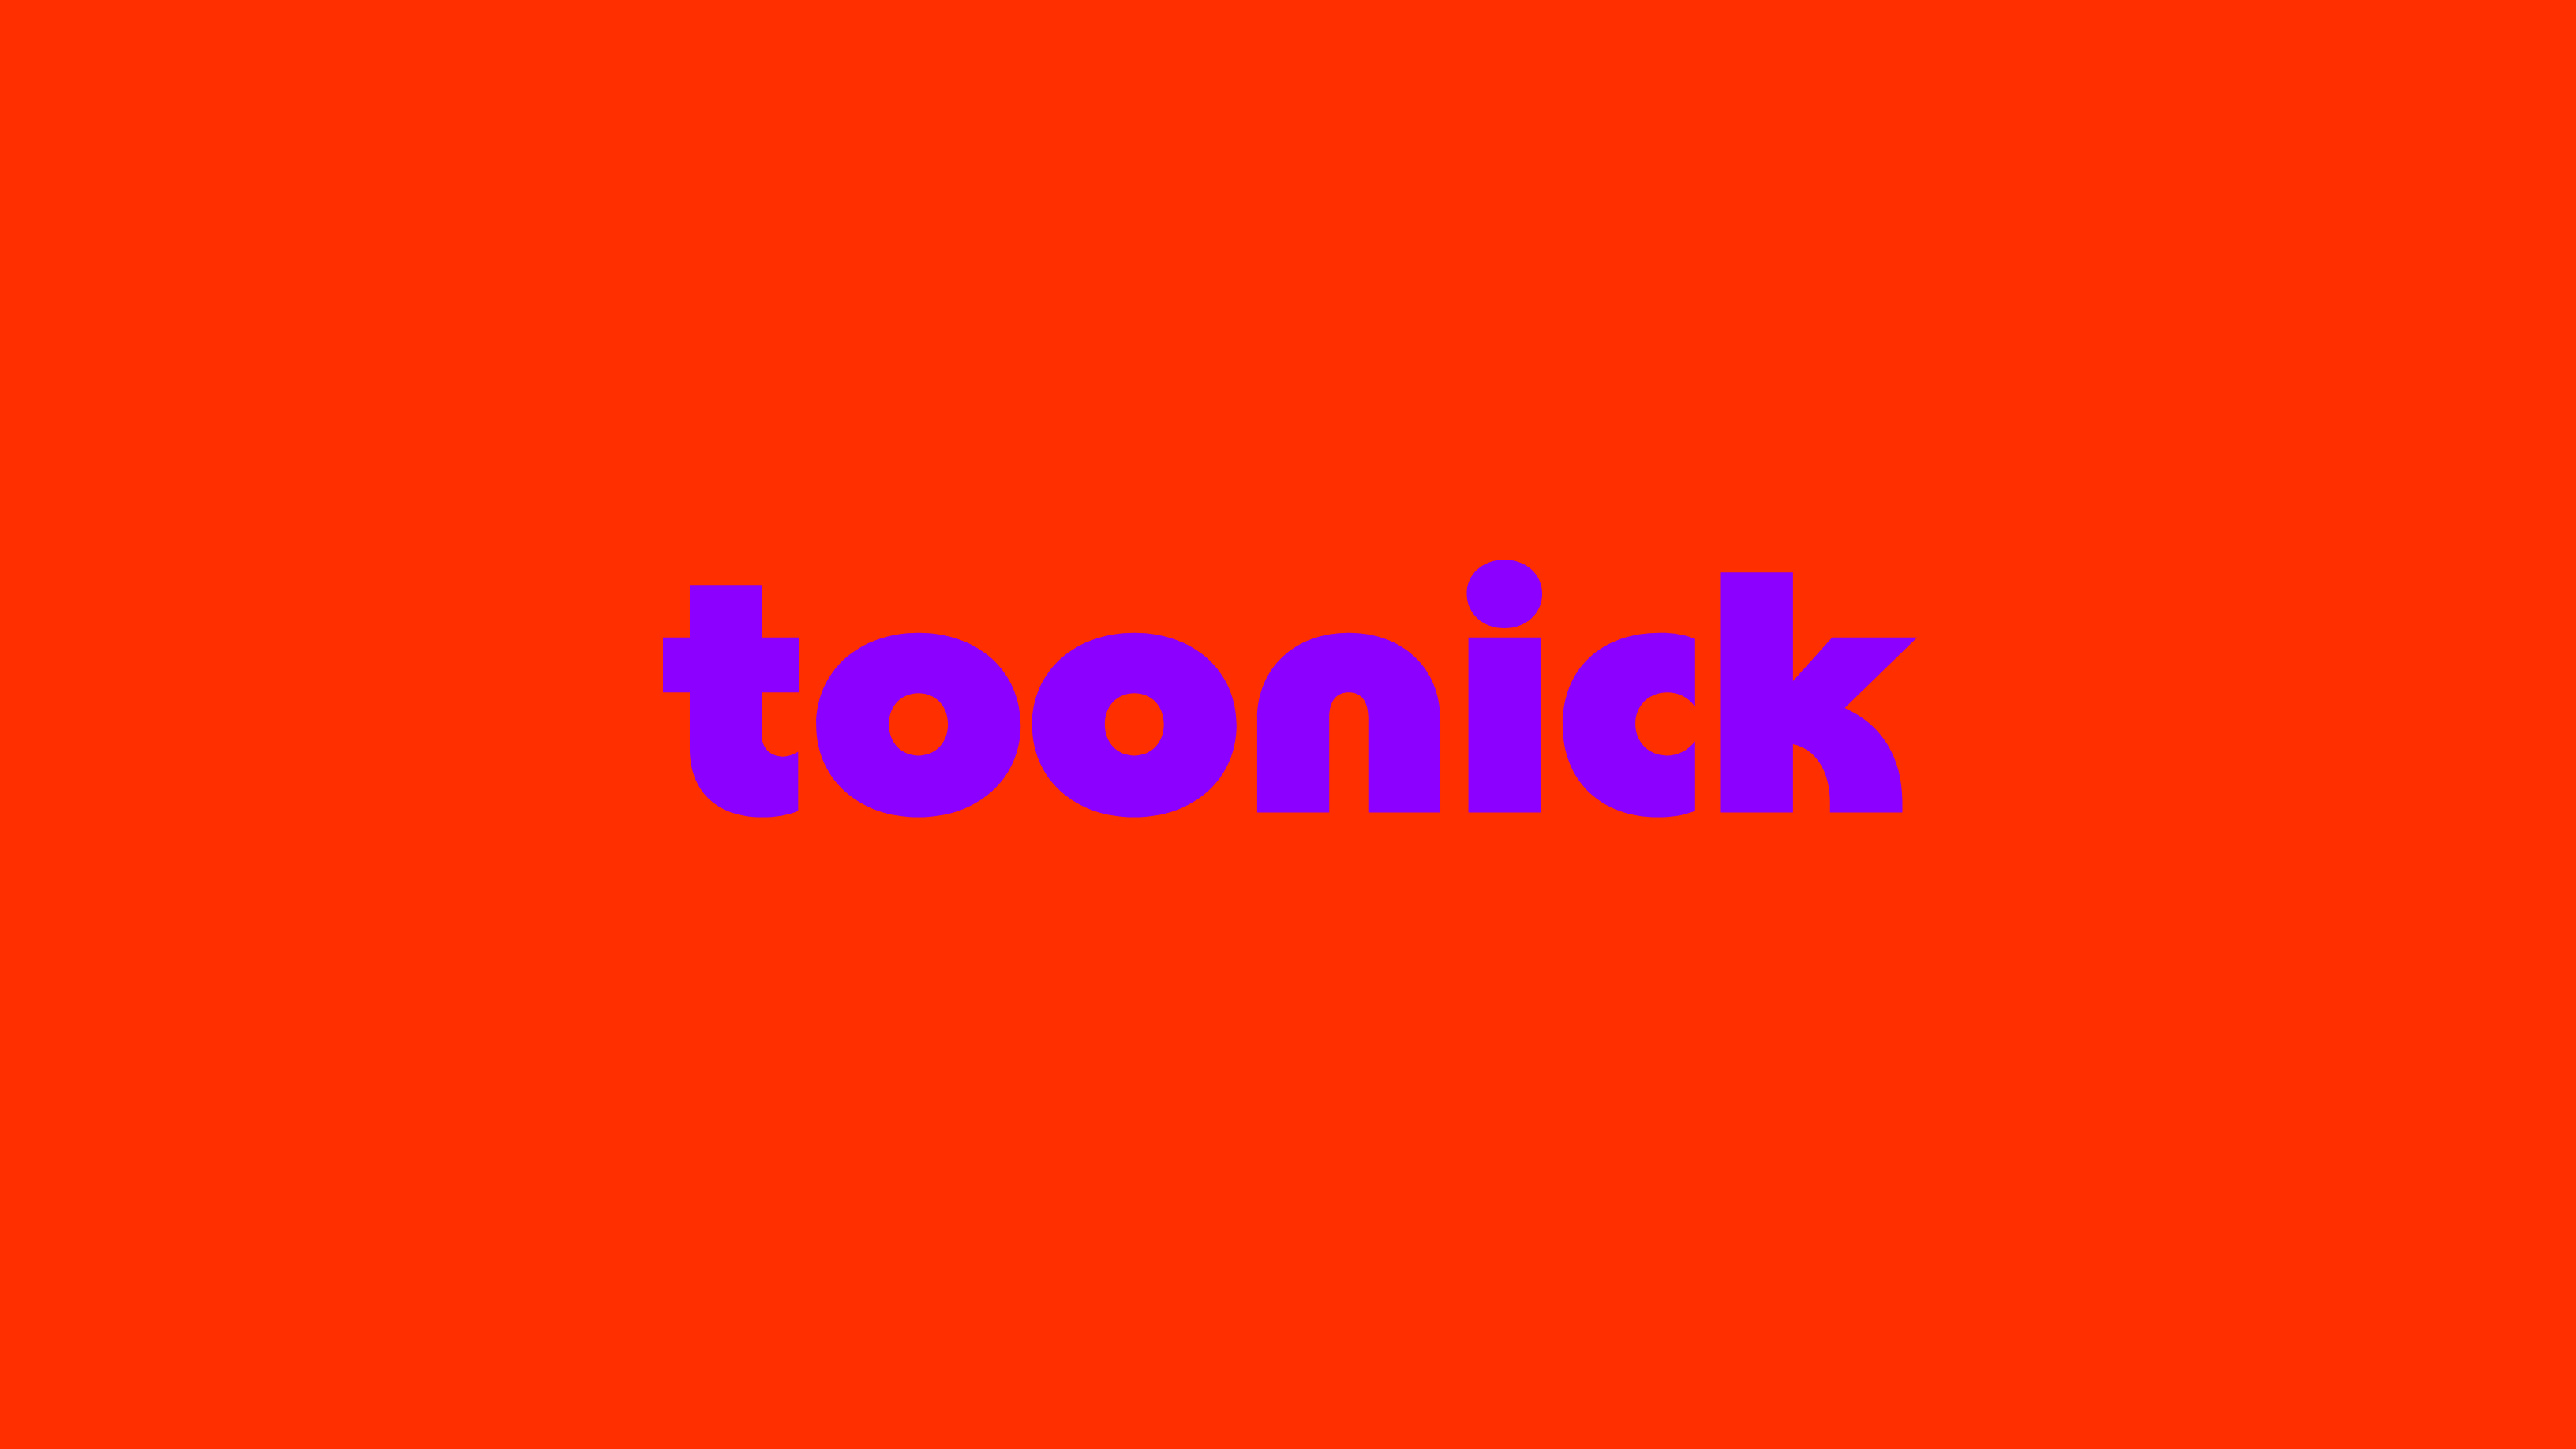 Toonick TV